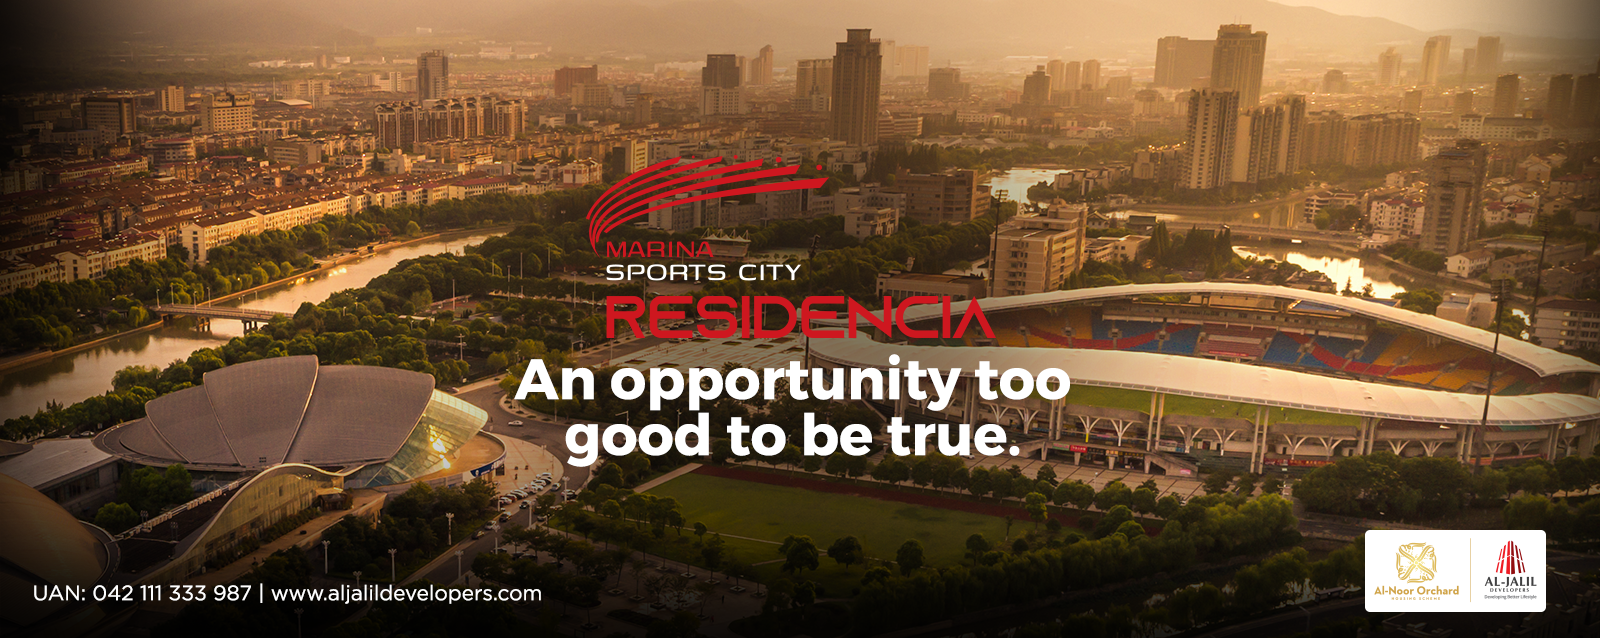 Marina Sports City Residencia: An opportunity too good to be true.